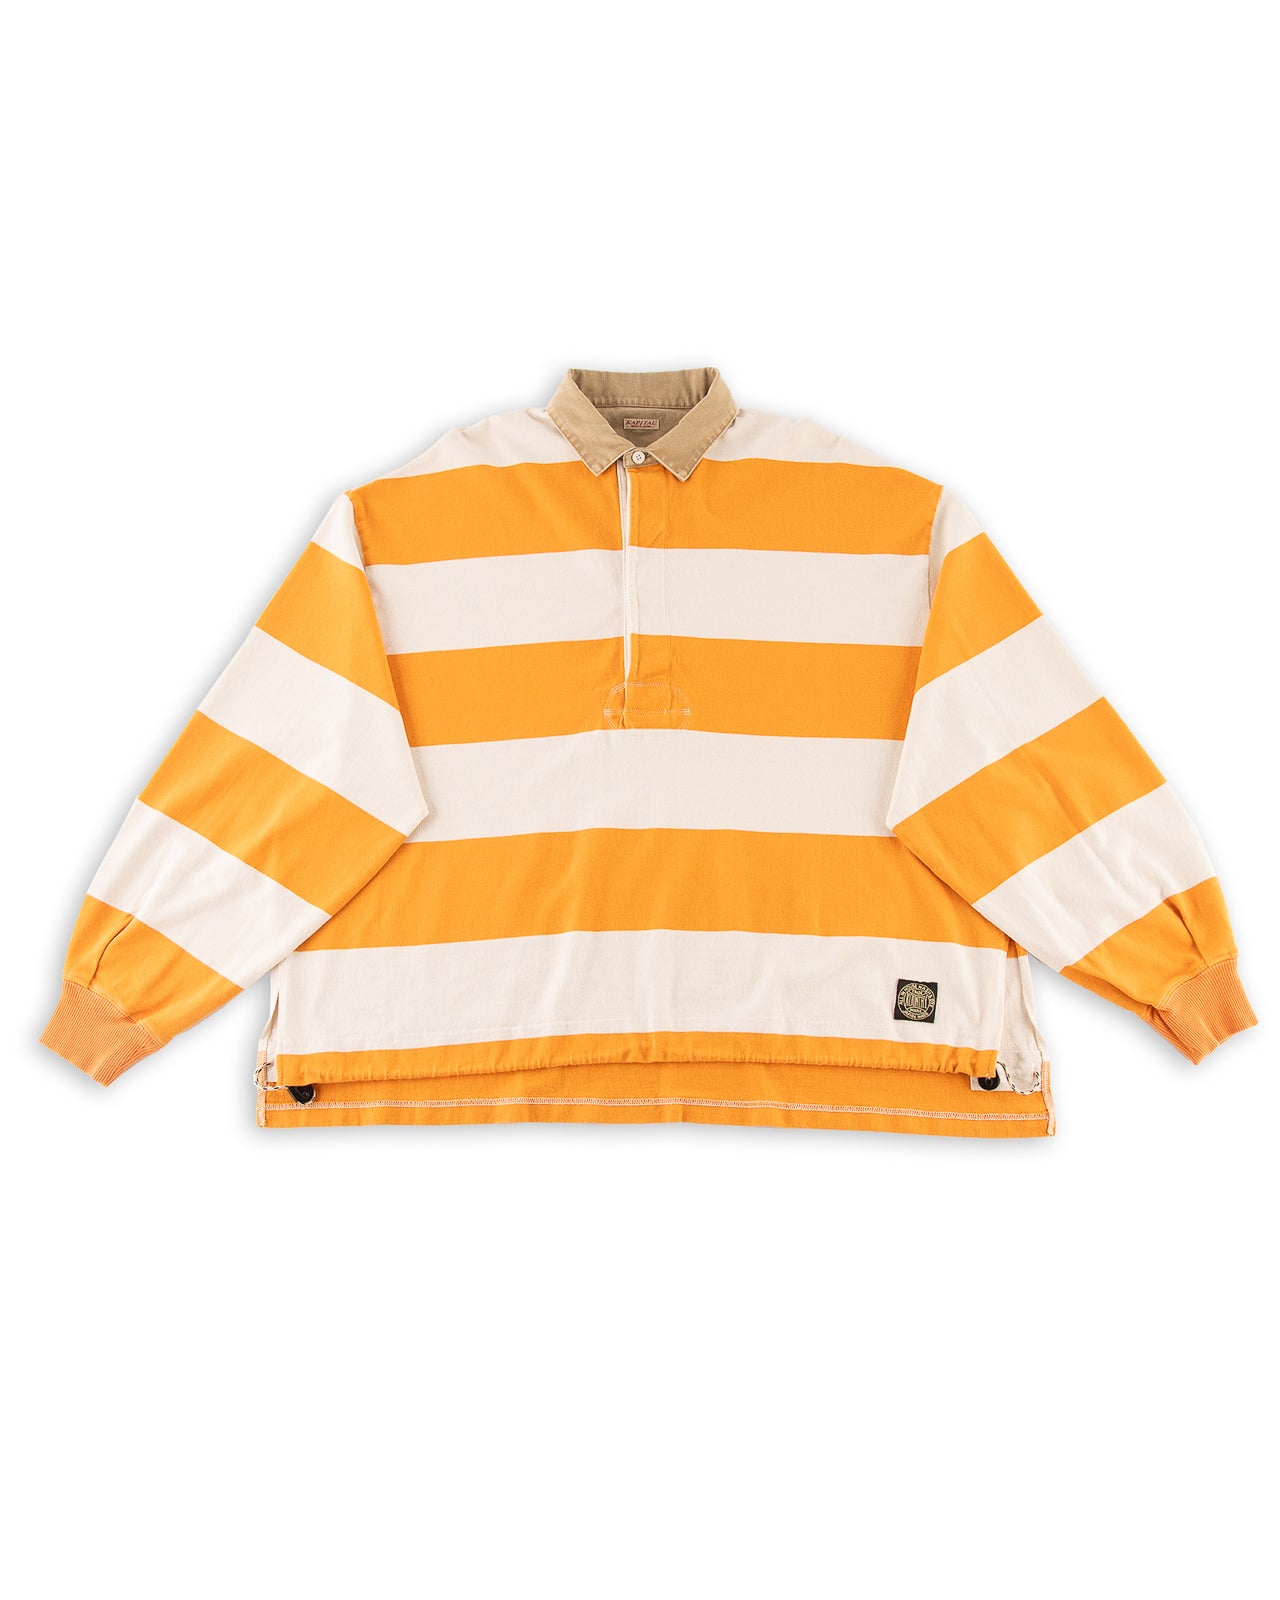 JAIL Stripe Jersey BIG Rugger Shirt - Ecru x Orange 3